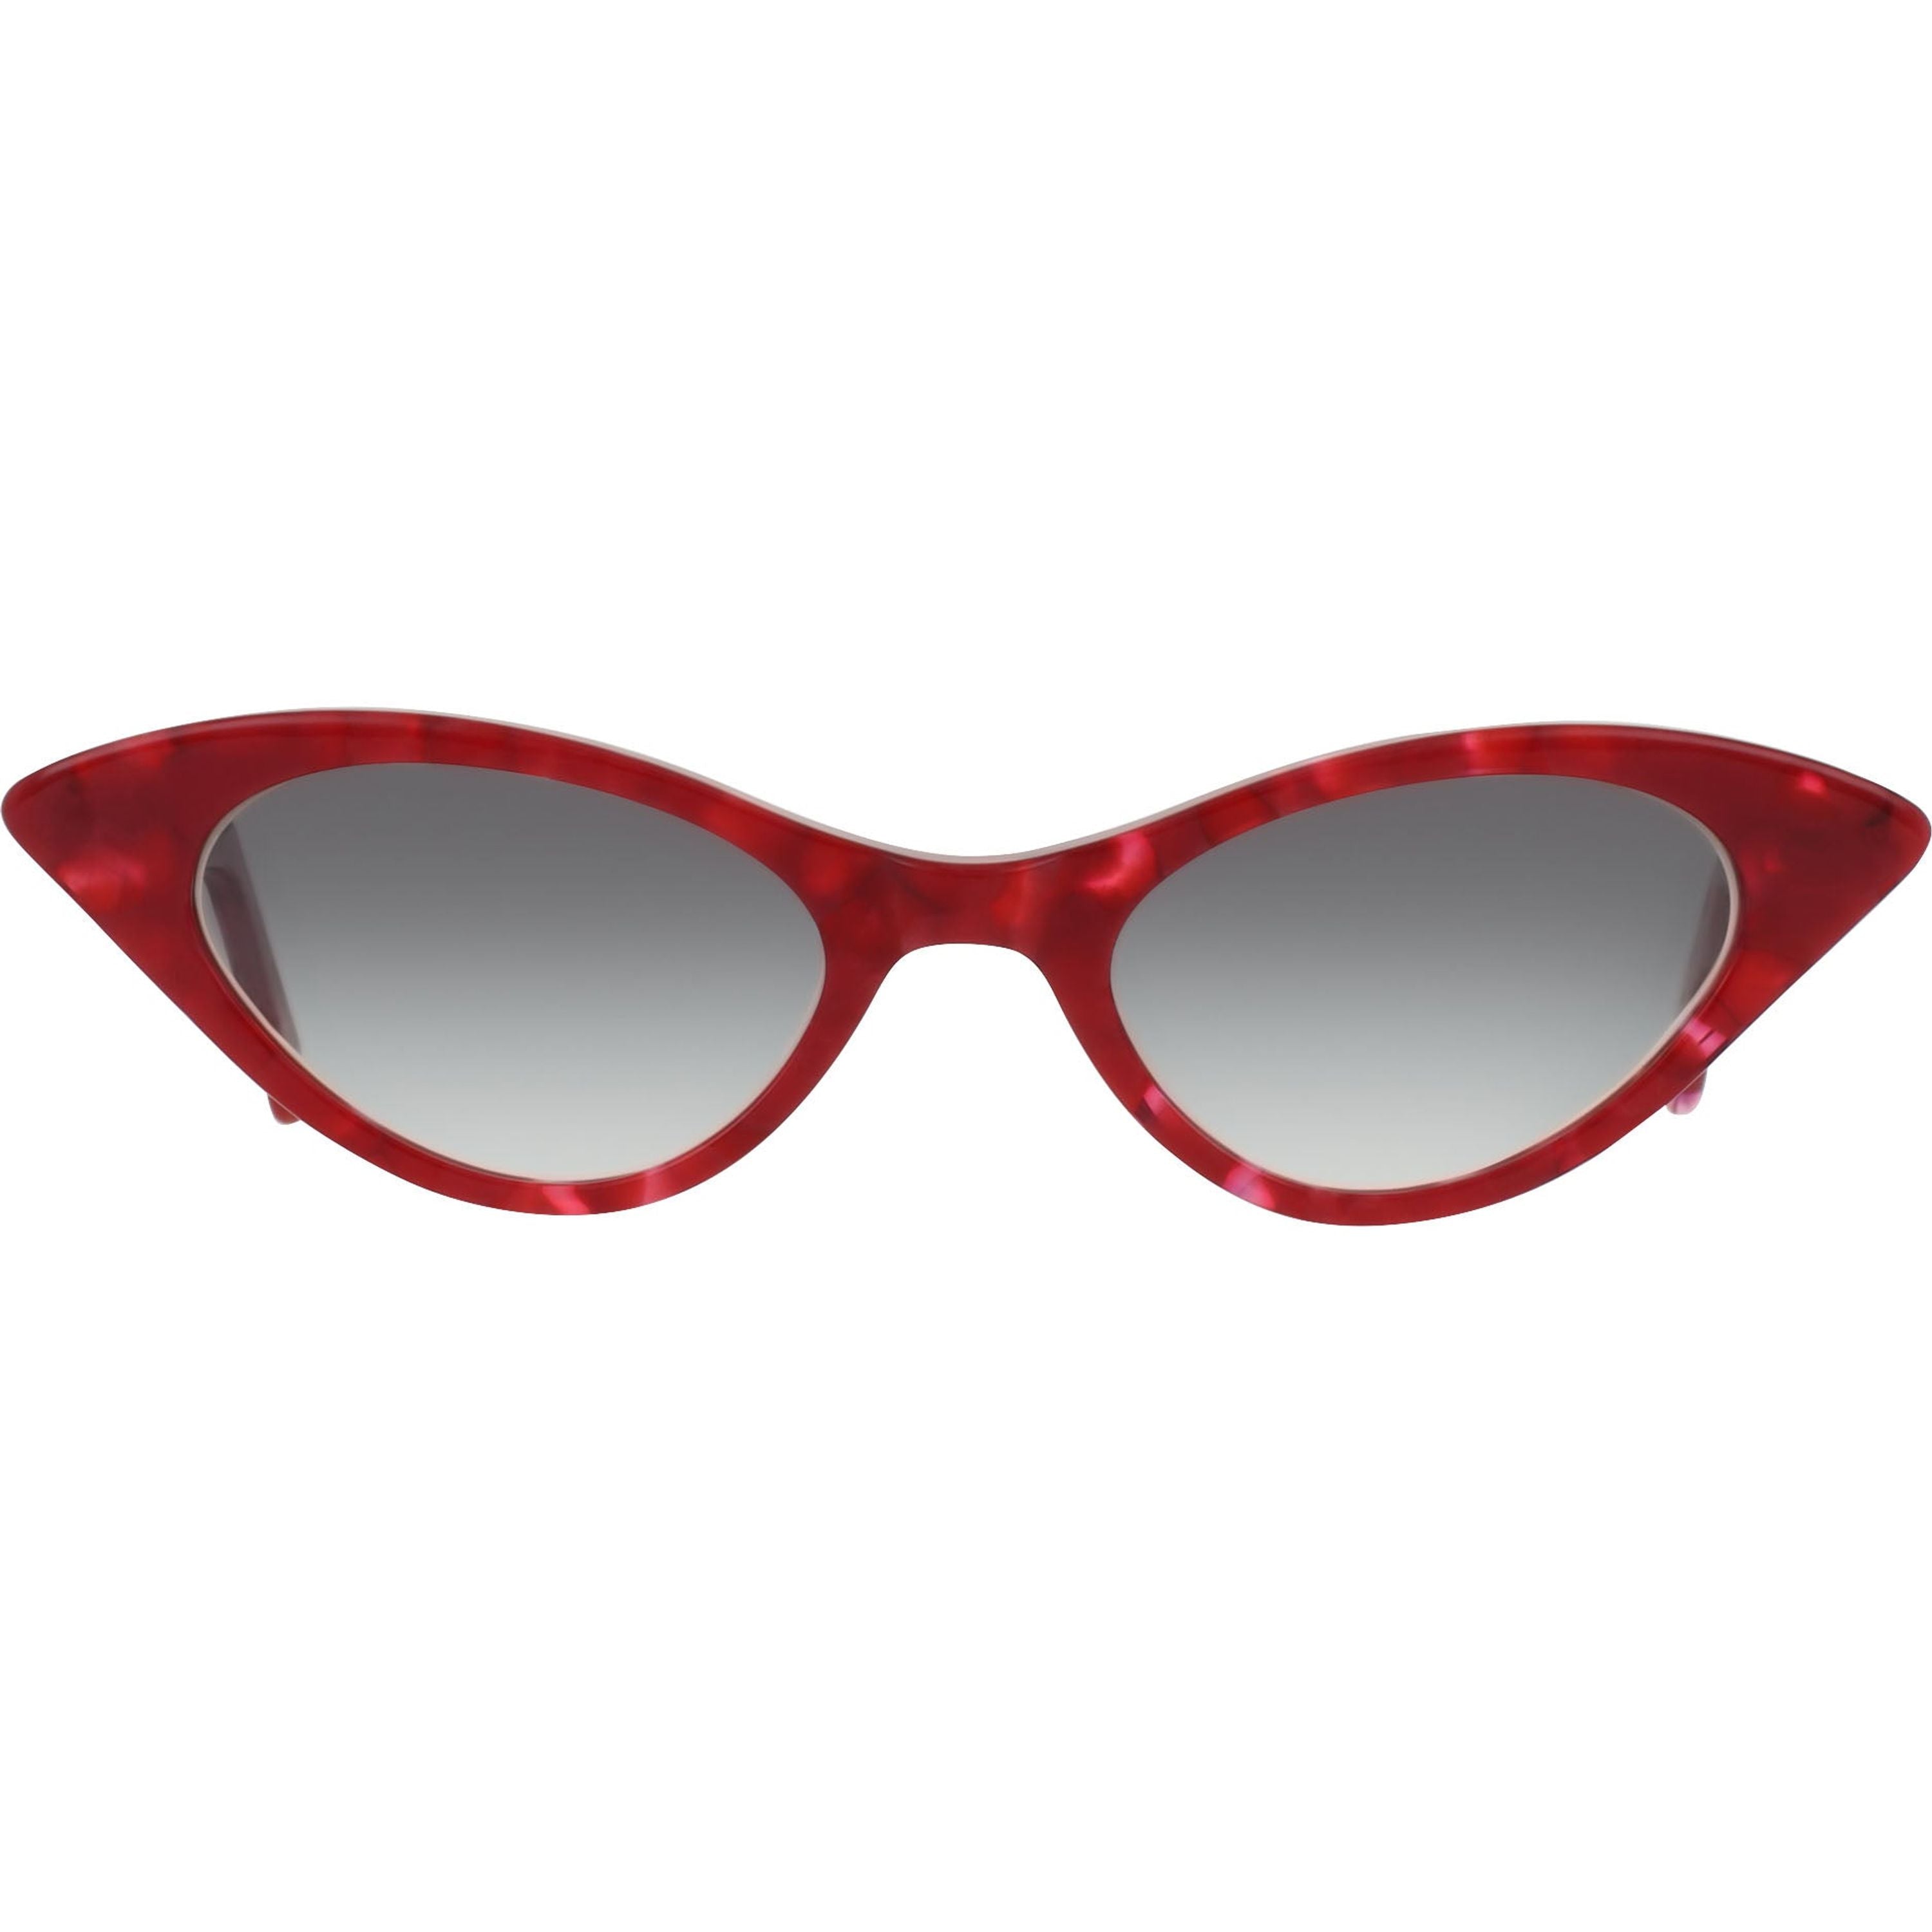 Aggregate 207+ new look sunglasses uk